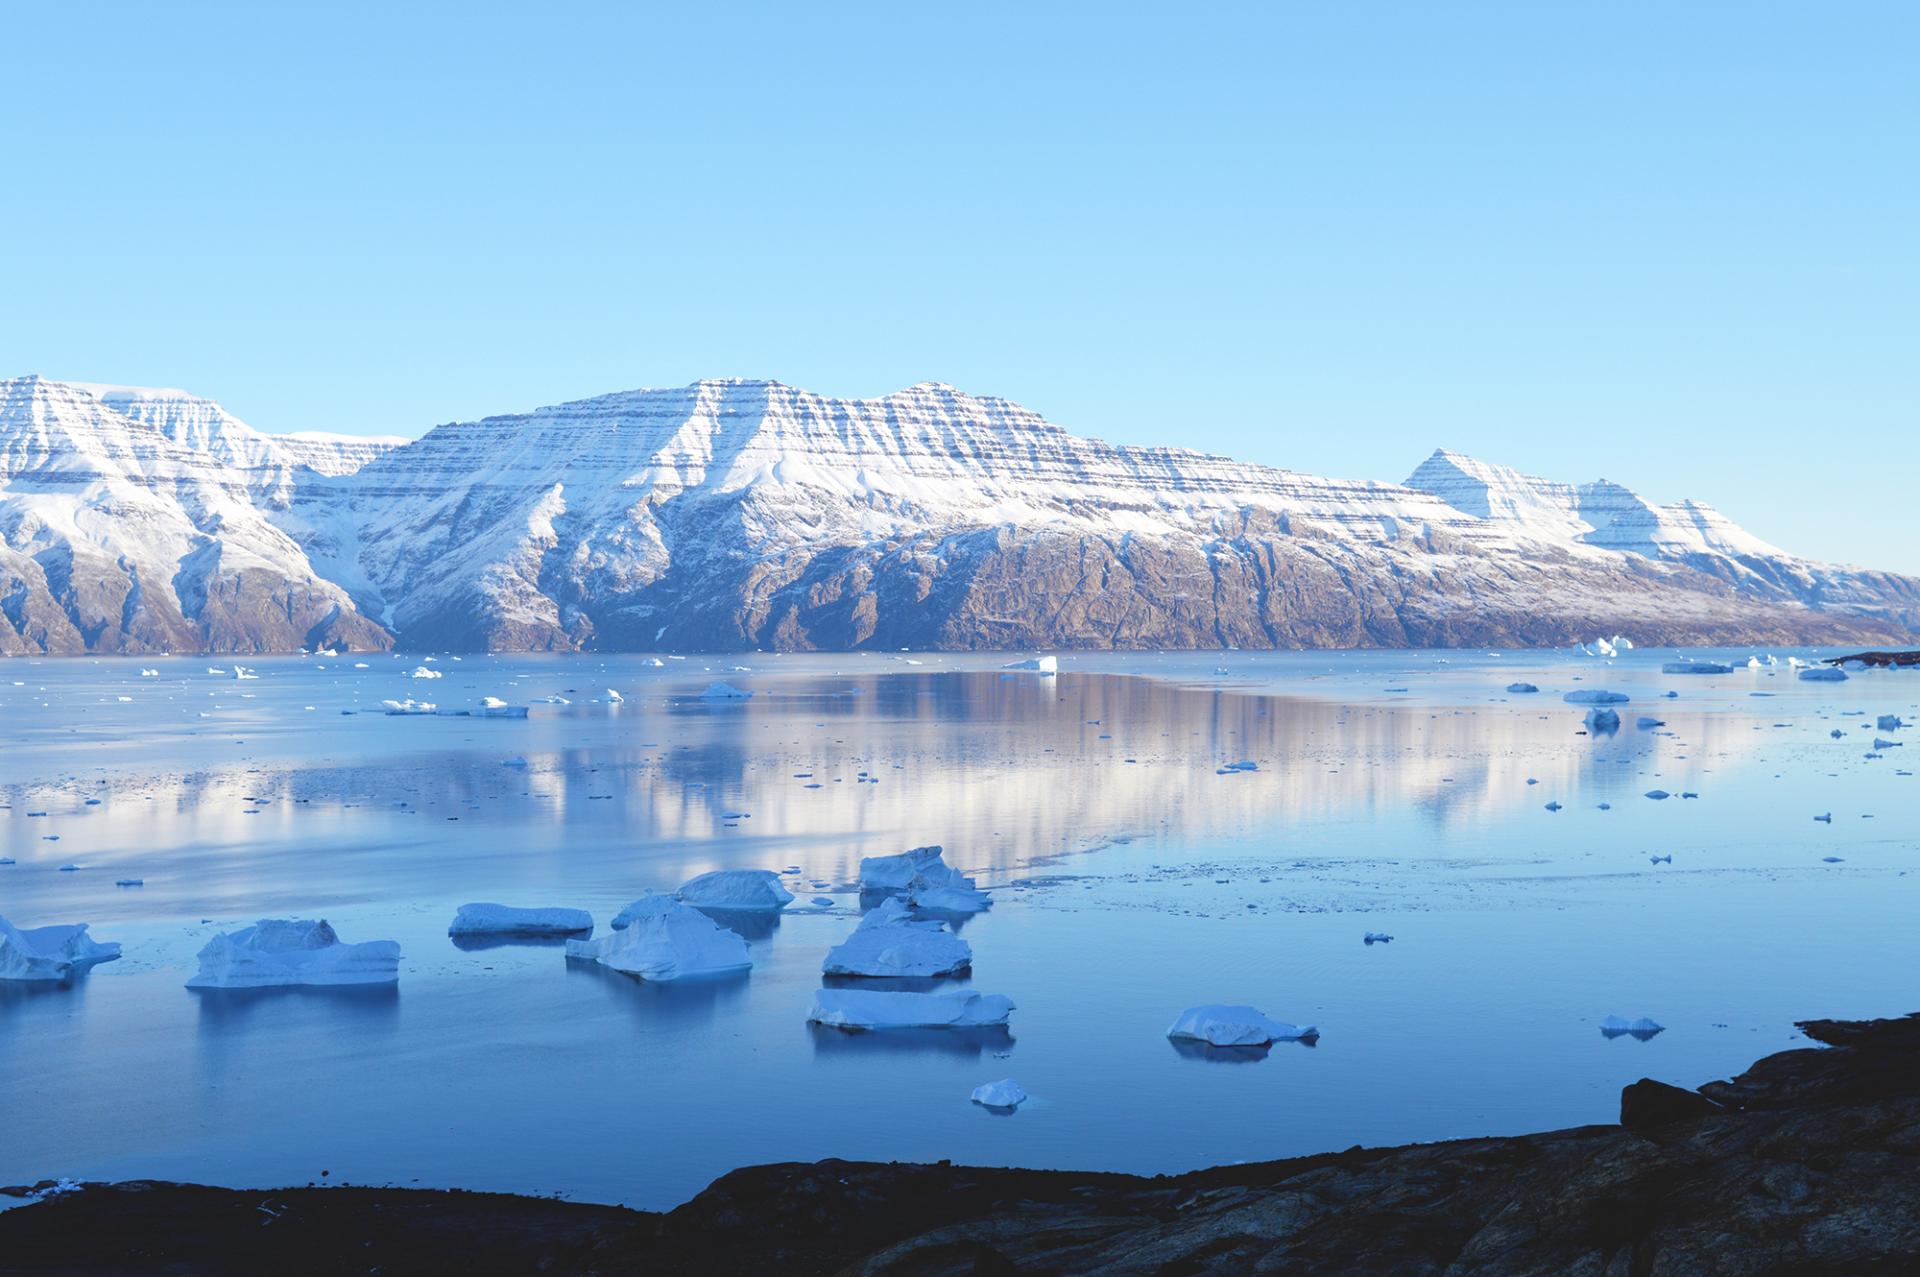 Greenland travel blog - an Arctic adventure in Greenland